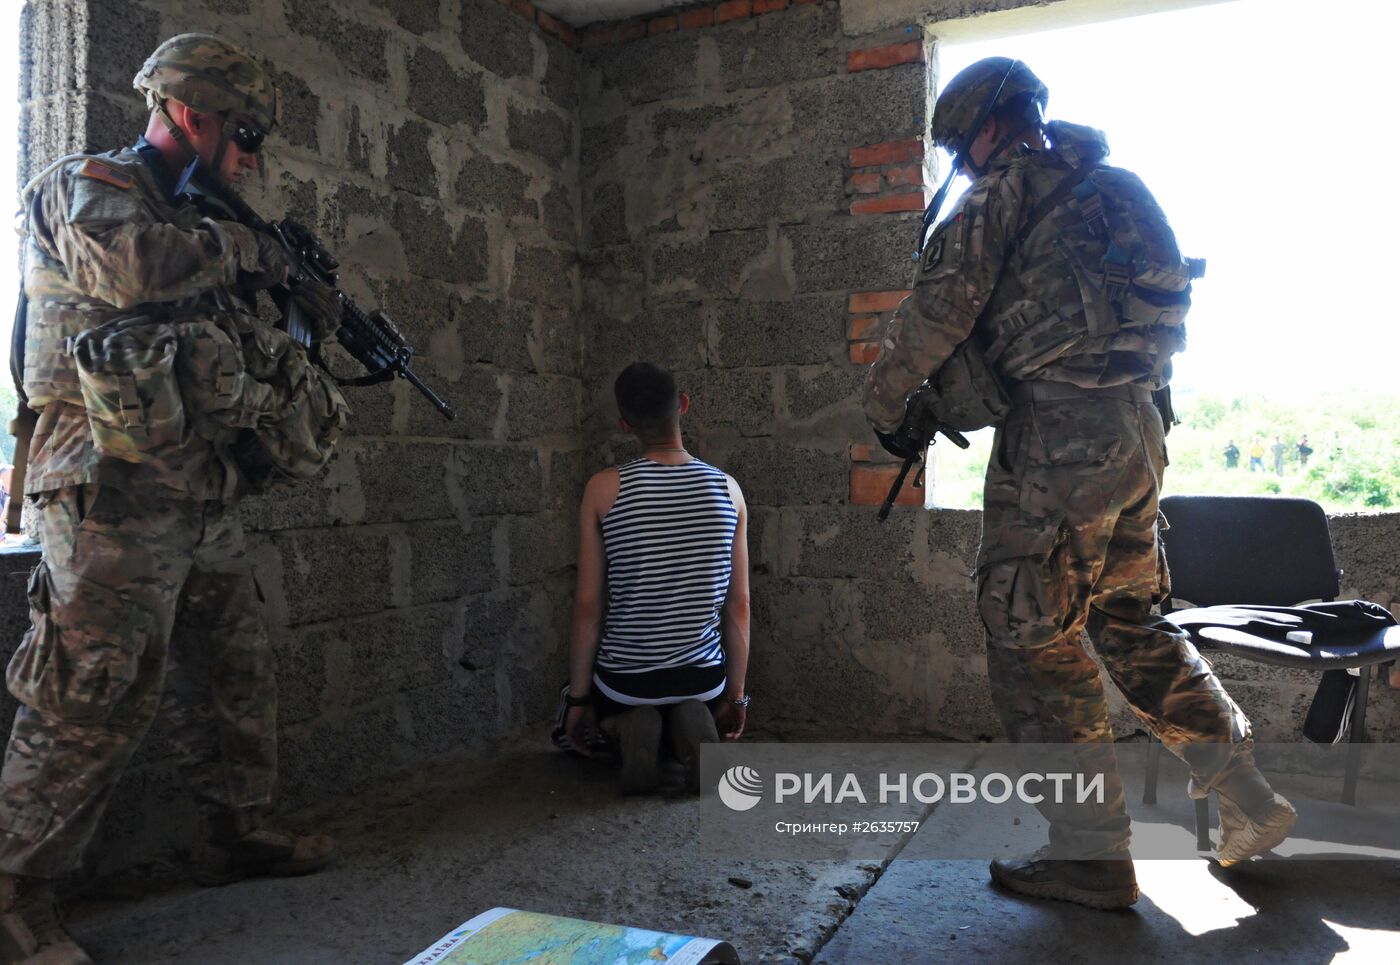 Украино-американские учения Fearless Guardian - 2015